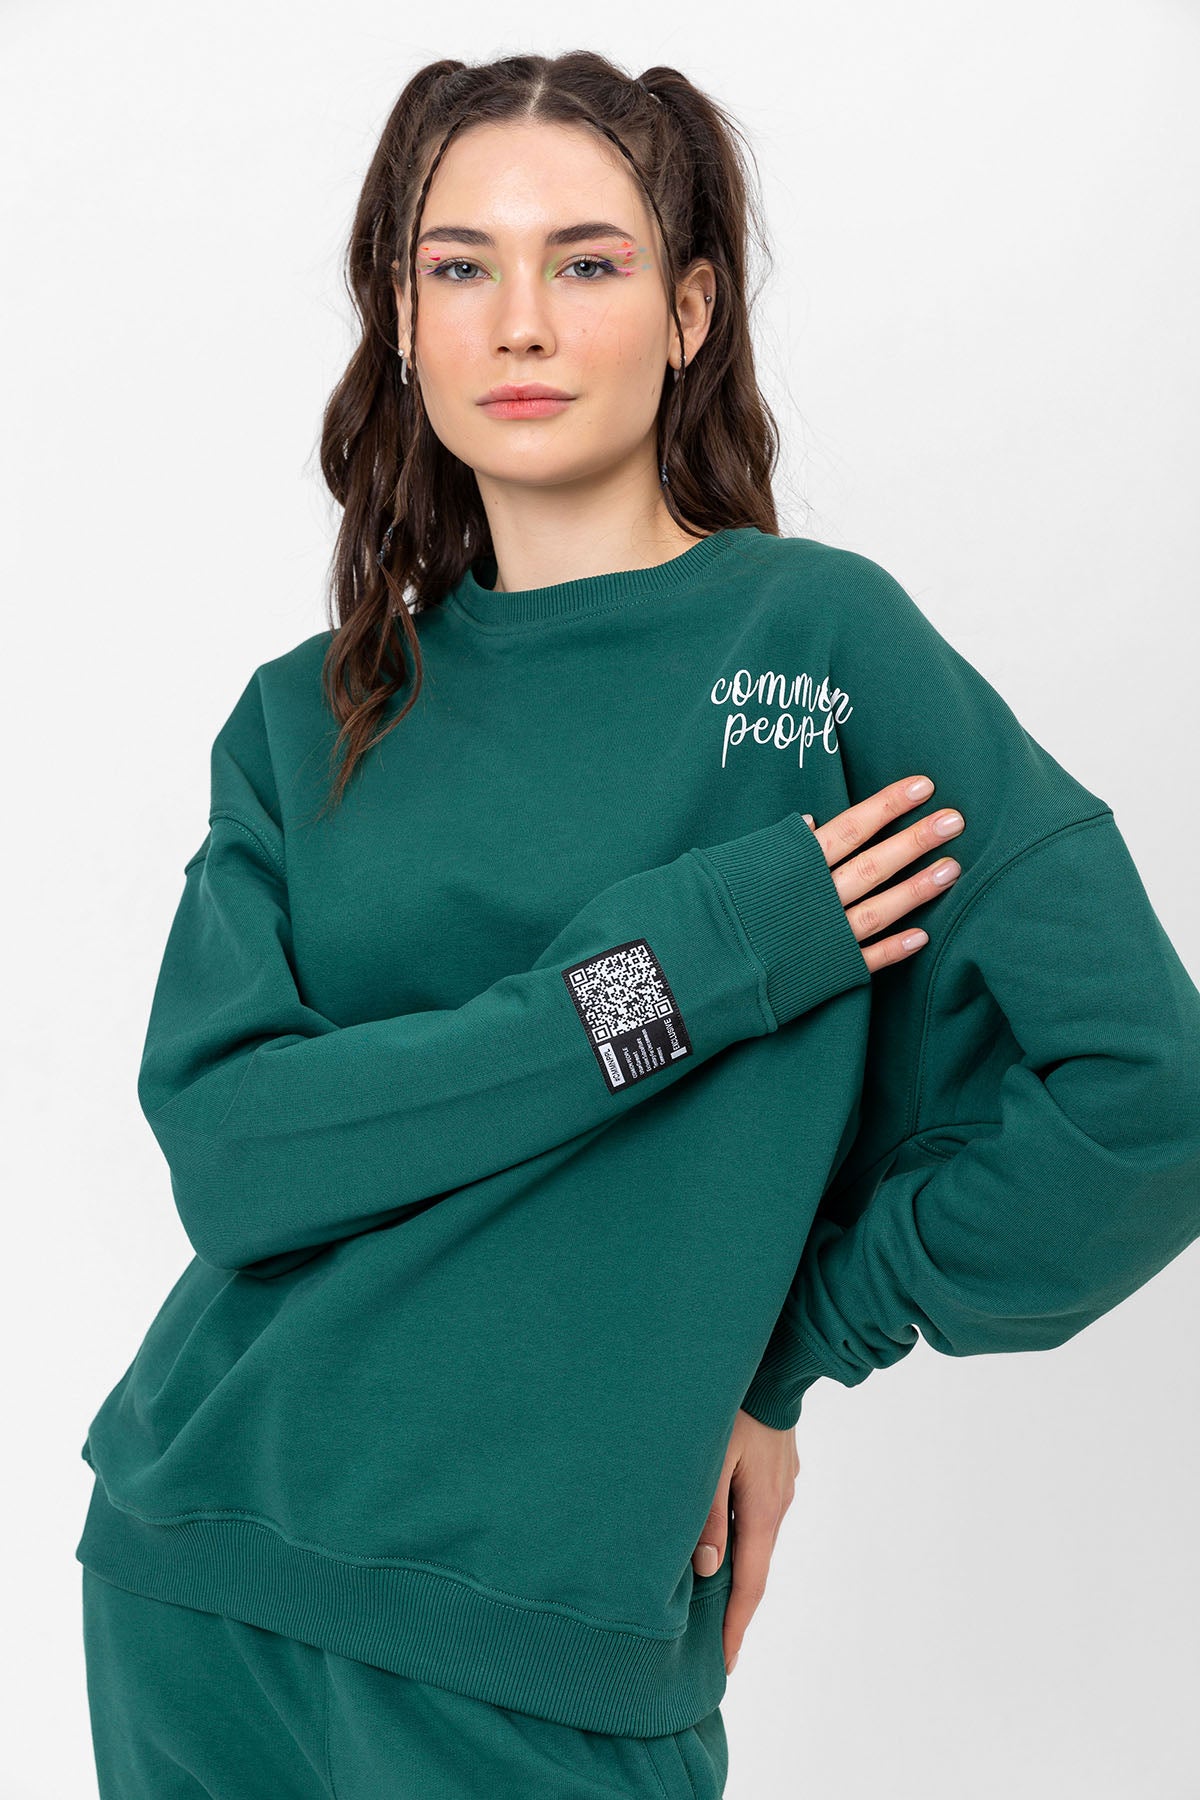 Less Dark Green Sweatshirt